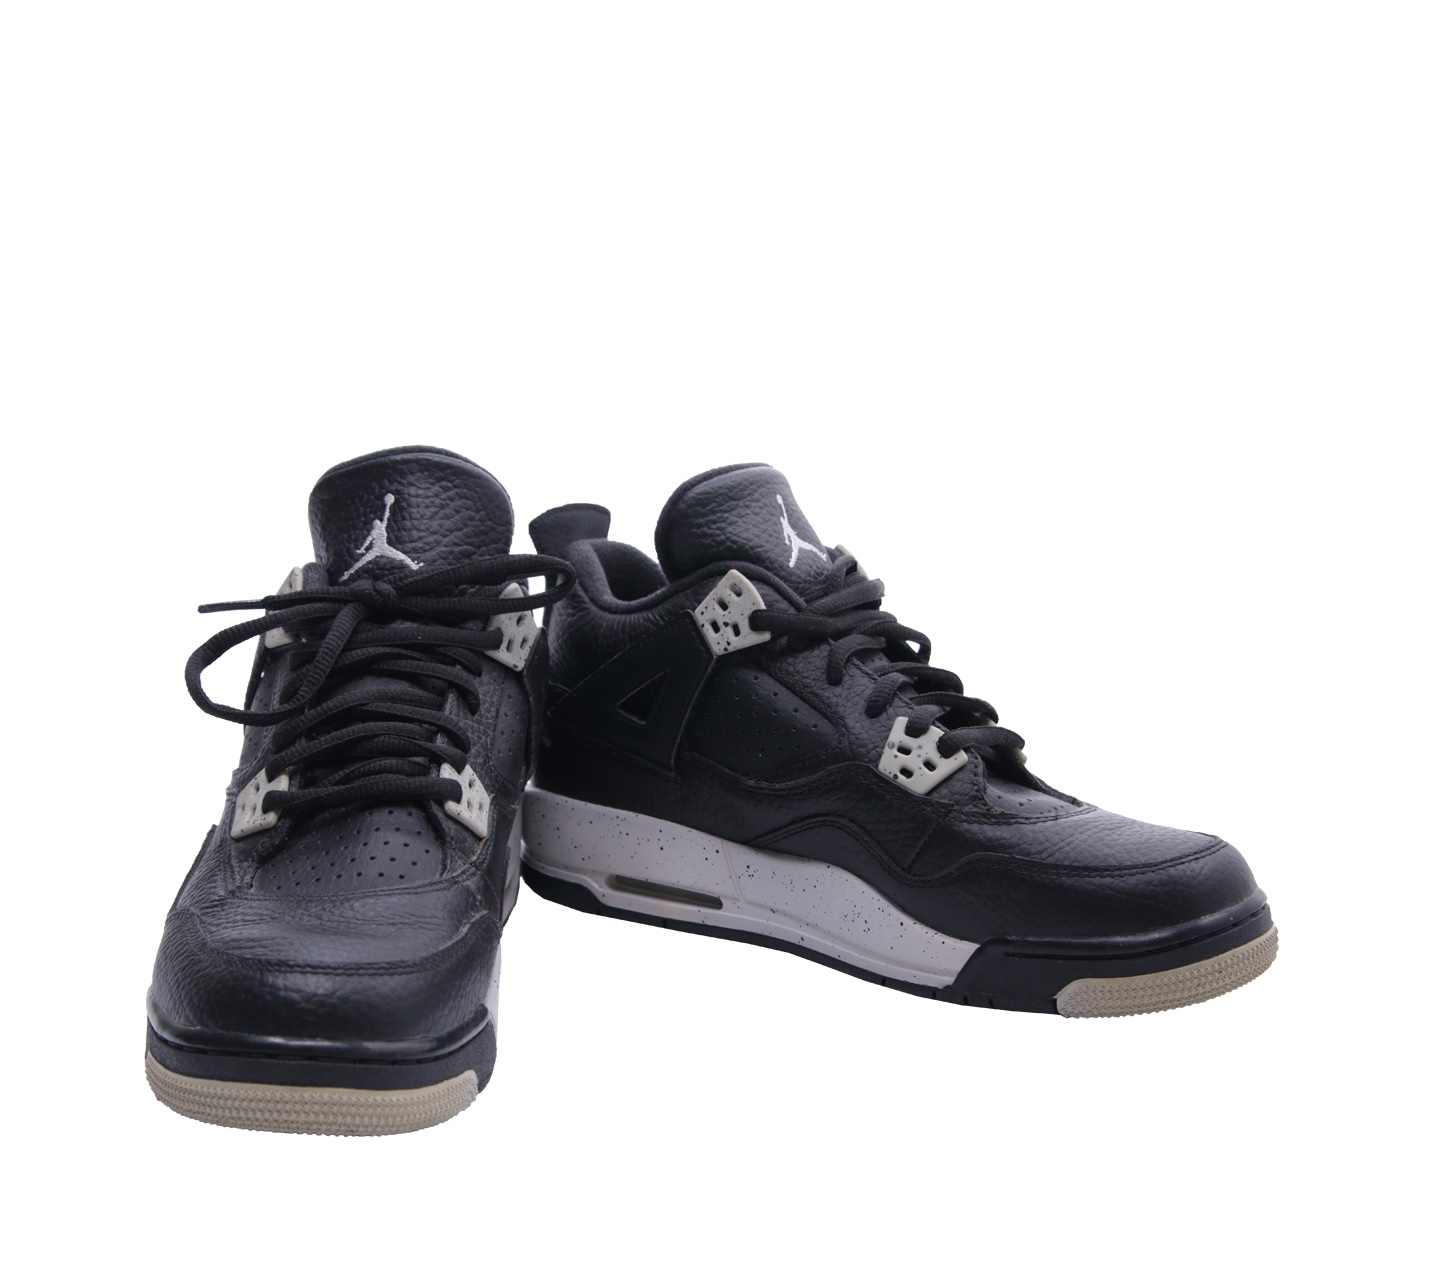 Nike Black Air Jordan Retro 4 IV Black Oreo Sneakers